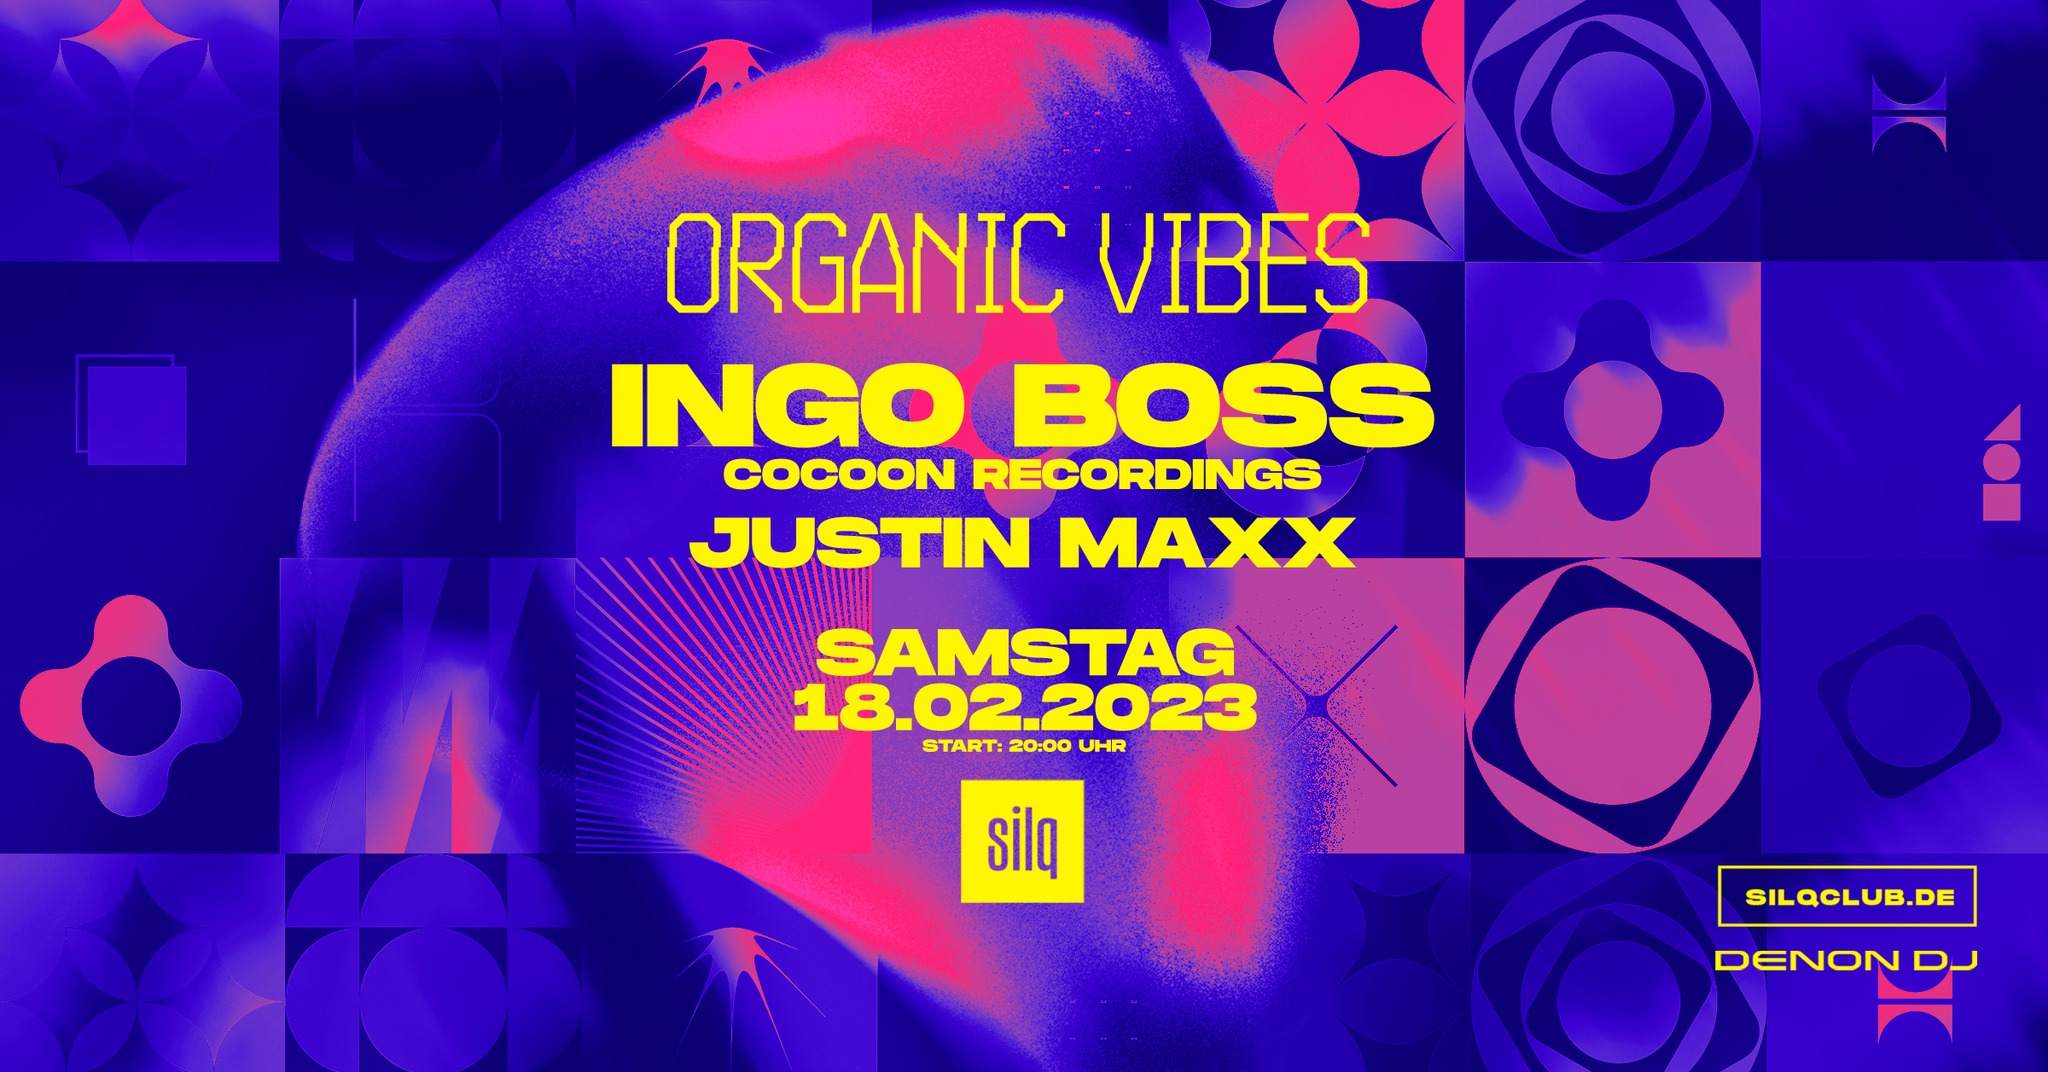 Organic Vibes with Ingo Boss, Justin Maxx - フライヤー表